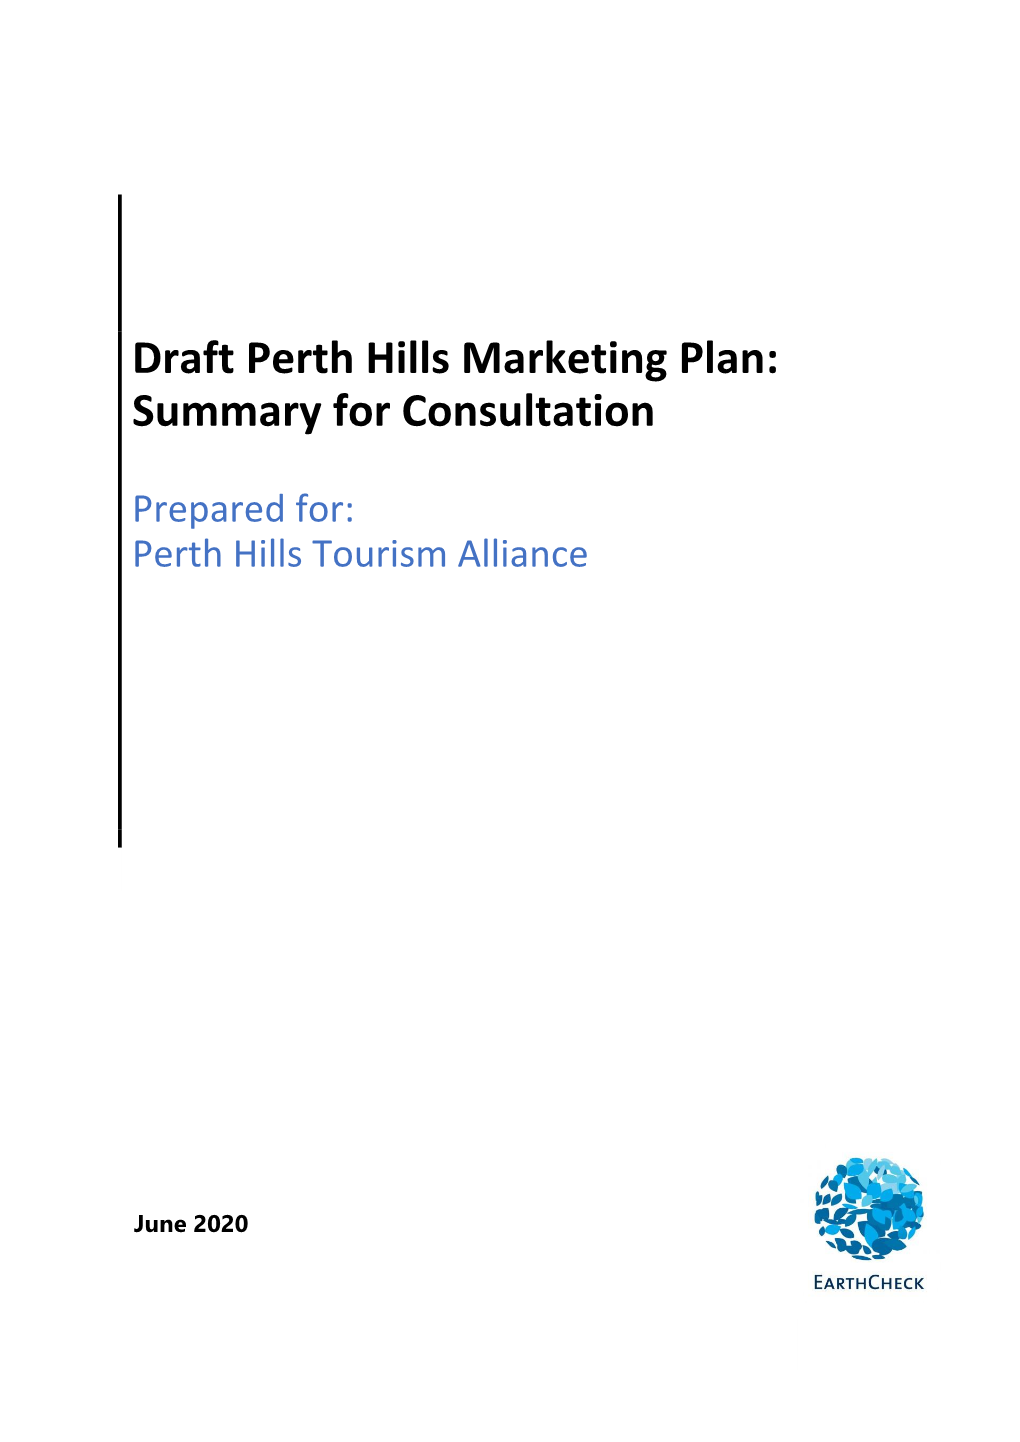 Draft Perth Hills Marketing Plan: Summary for Consultation